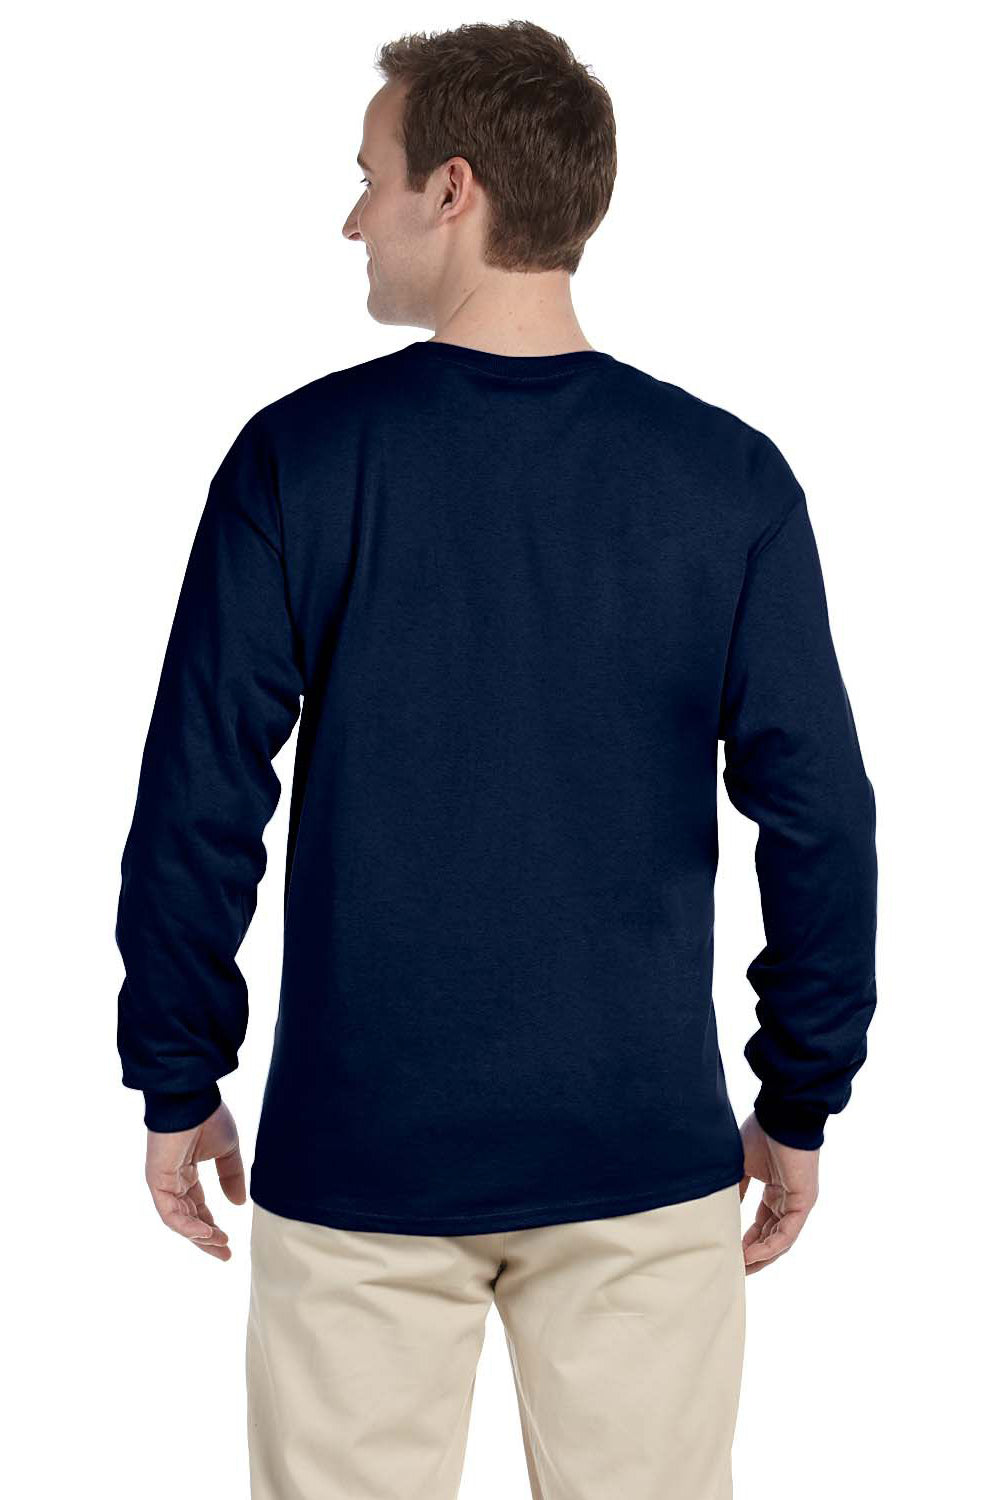 Fruit Of The Loom 4930 Mens HD Jersey Long Sleeve Crewneck T-Shirt Navy Blue Back